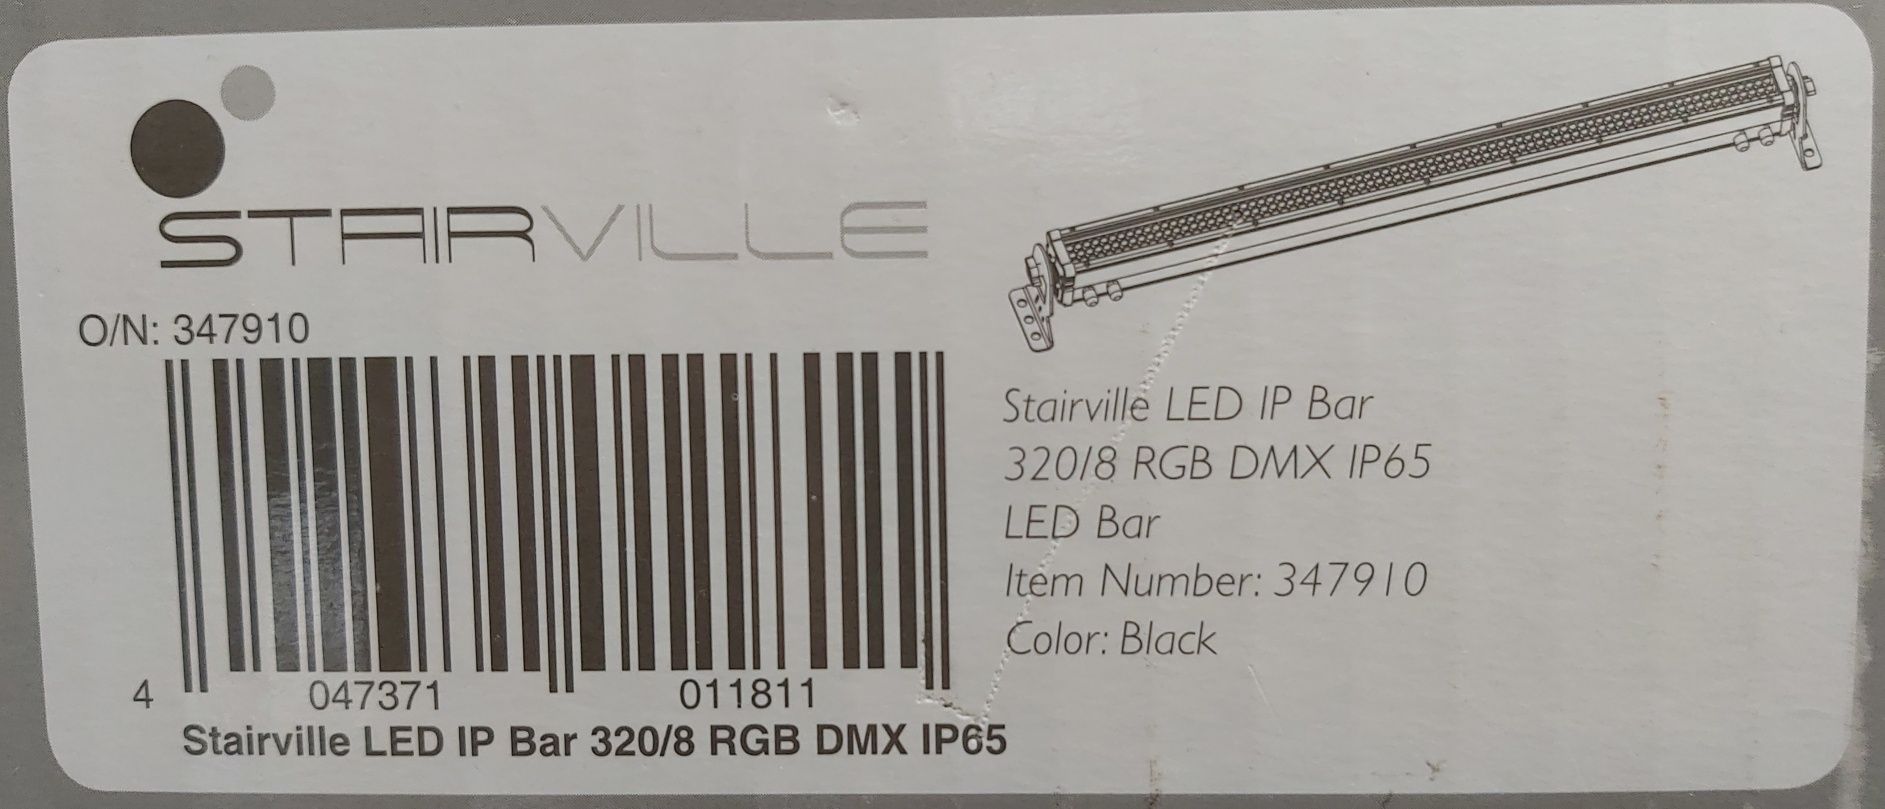 Barra LED Stairville LED IP Bar 320/8 RGB DMX IP65, Nova